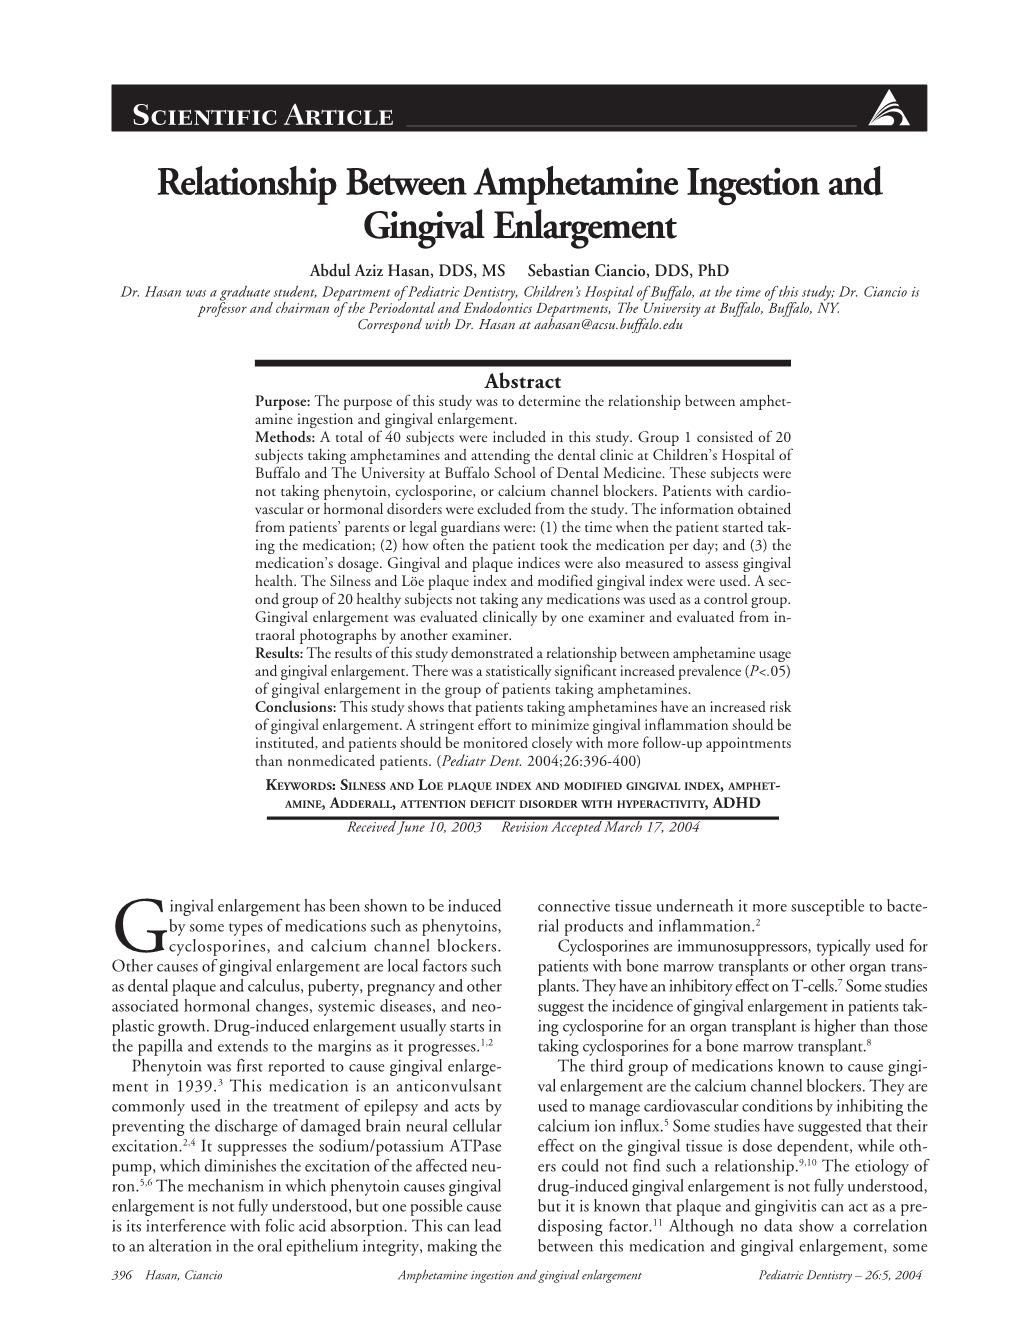 Relationship Between Amphetamine Ingestion and Gingival Enlargement Abdul Aziz Hasan, DDS, MS Sebastian Ciancio, DDS, Phd Dr